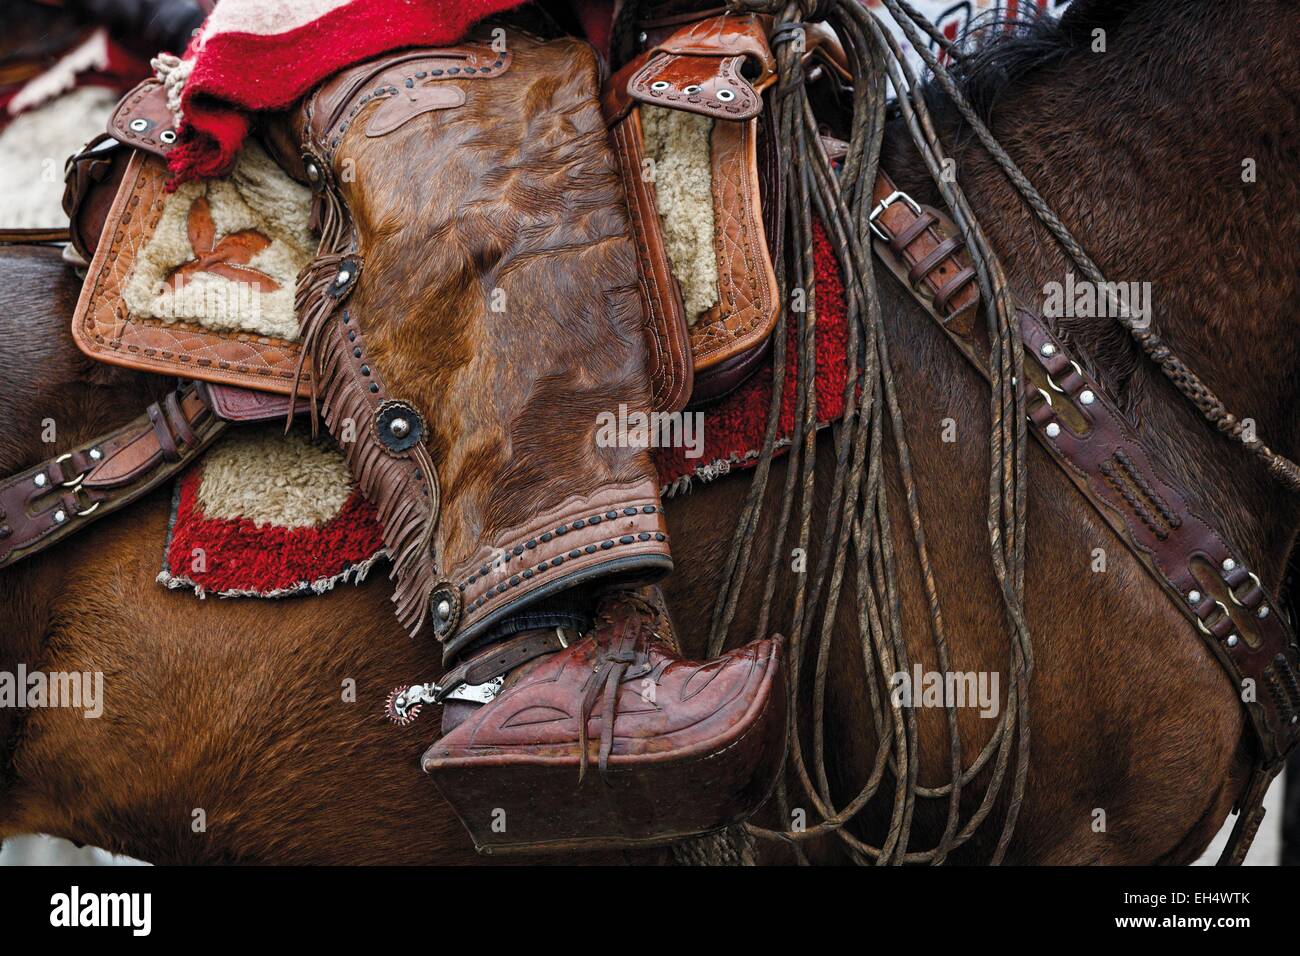 Ecuador, Ambato, Pelileo, detail of a rider at a local festive celebration Stock Photo